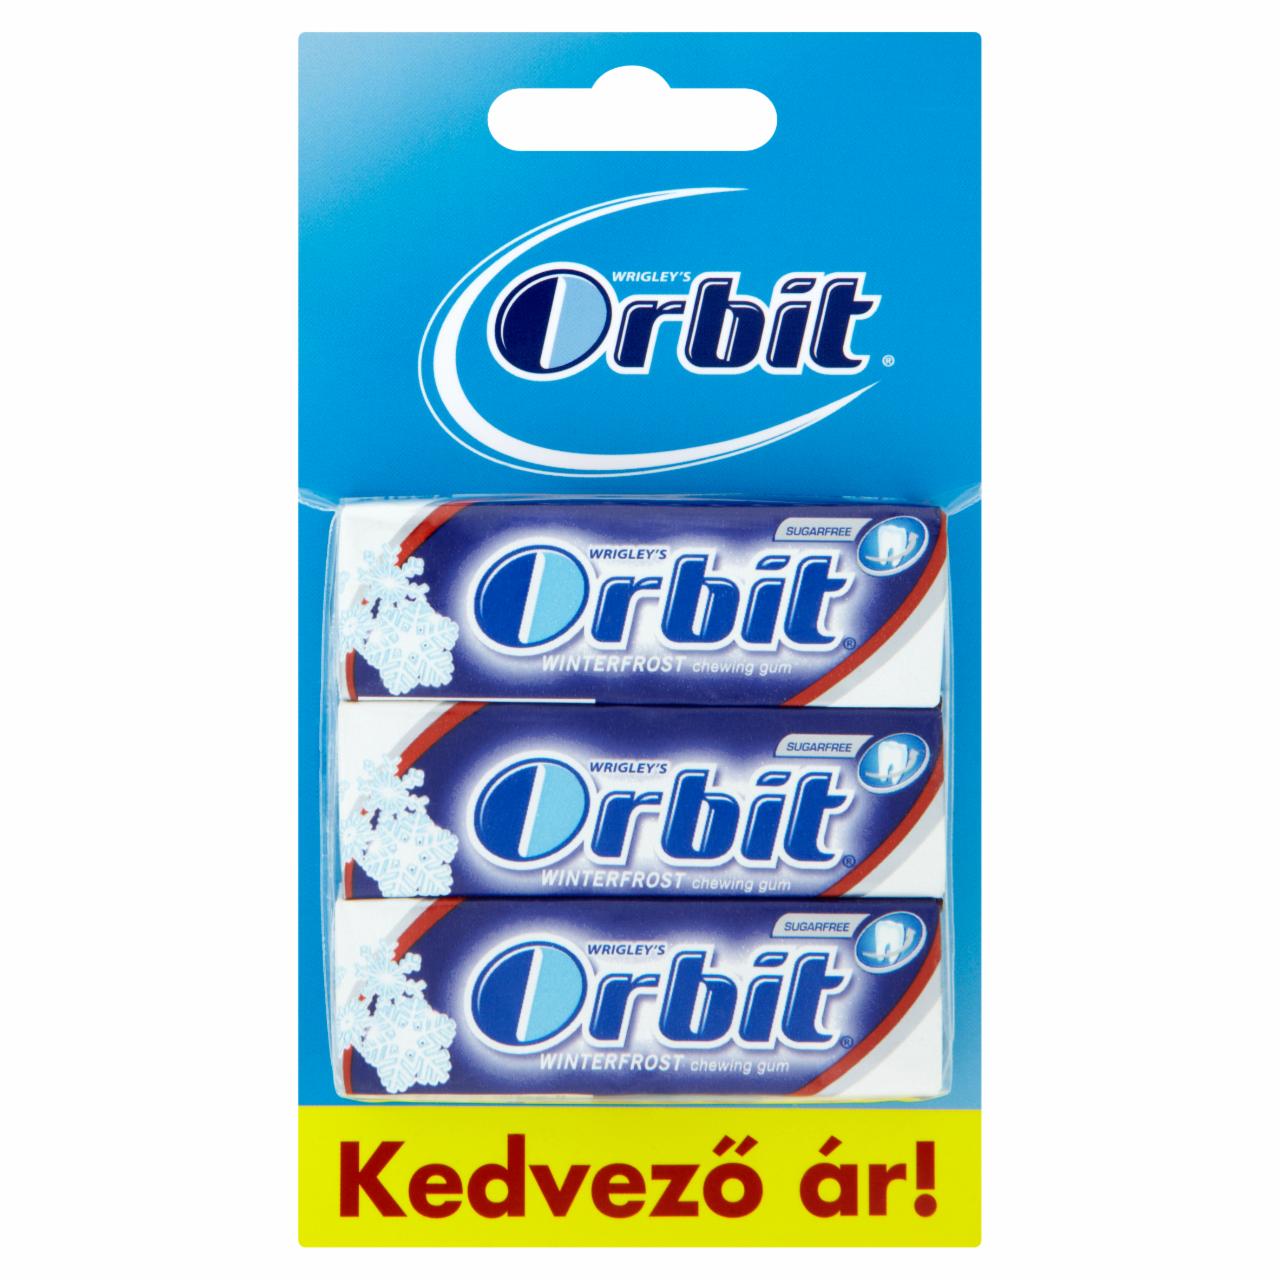 Képek - Orbit Winterfrost Multipack cukormentes rágógumi 3 x 14 g